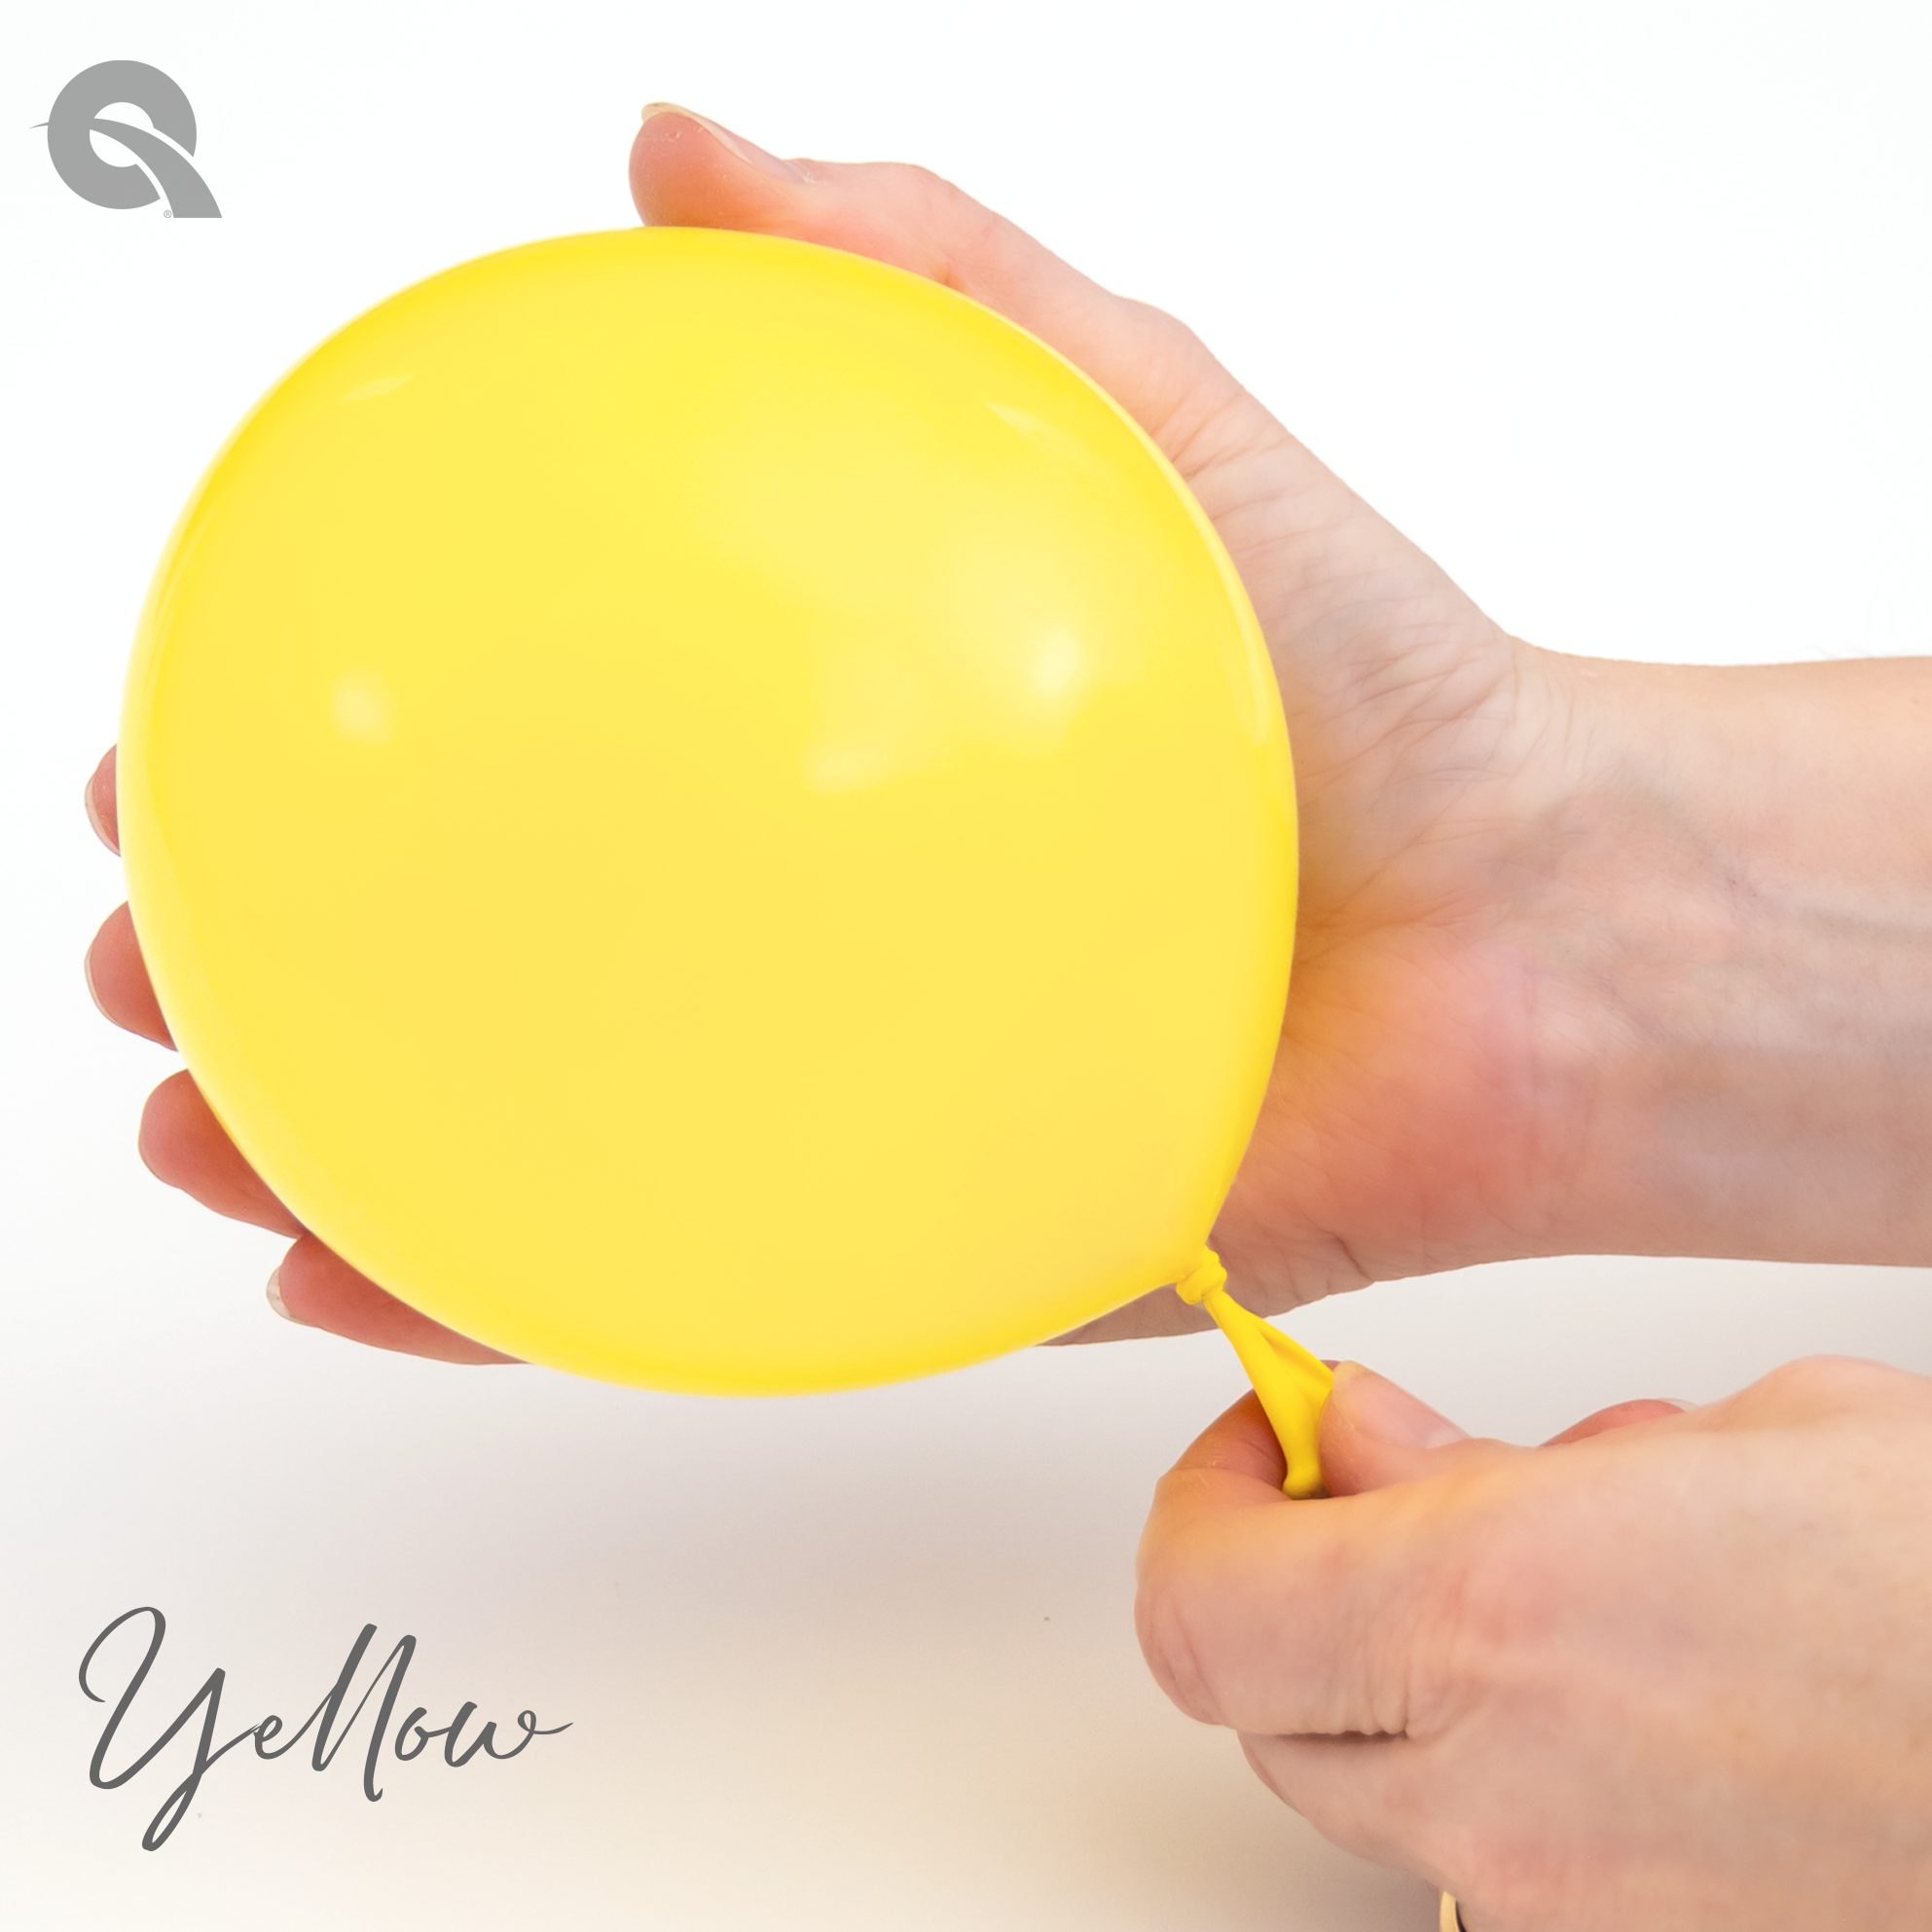 9" Qualatex Yellow Latex Balloons | 100 Count